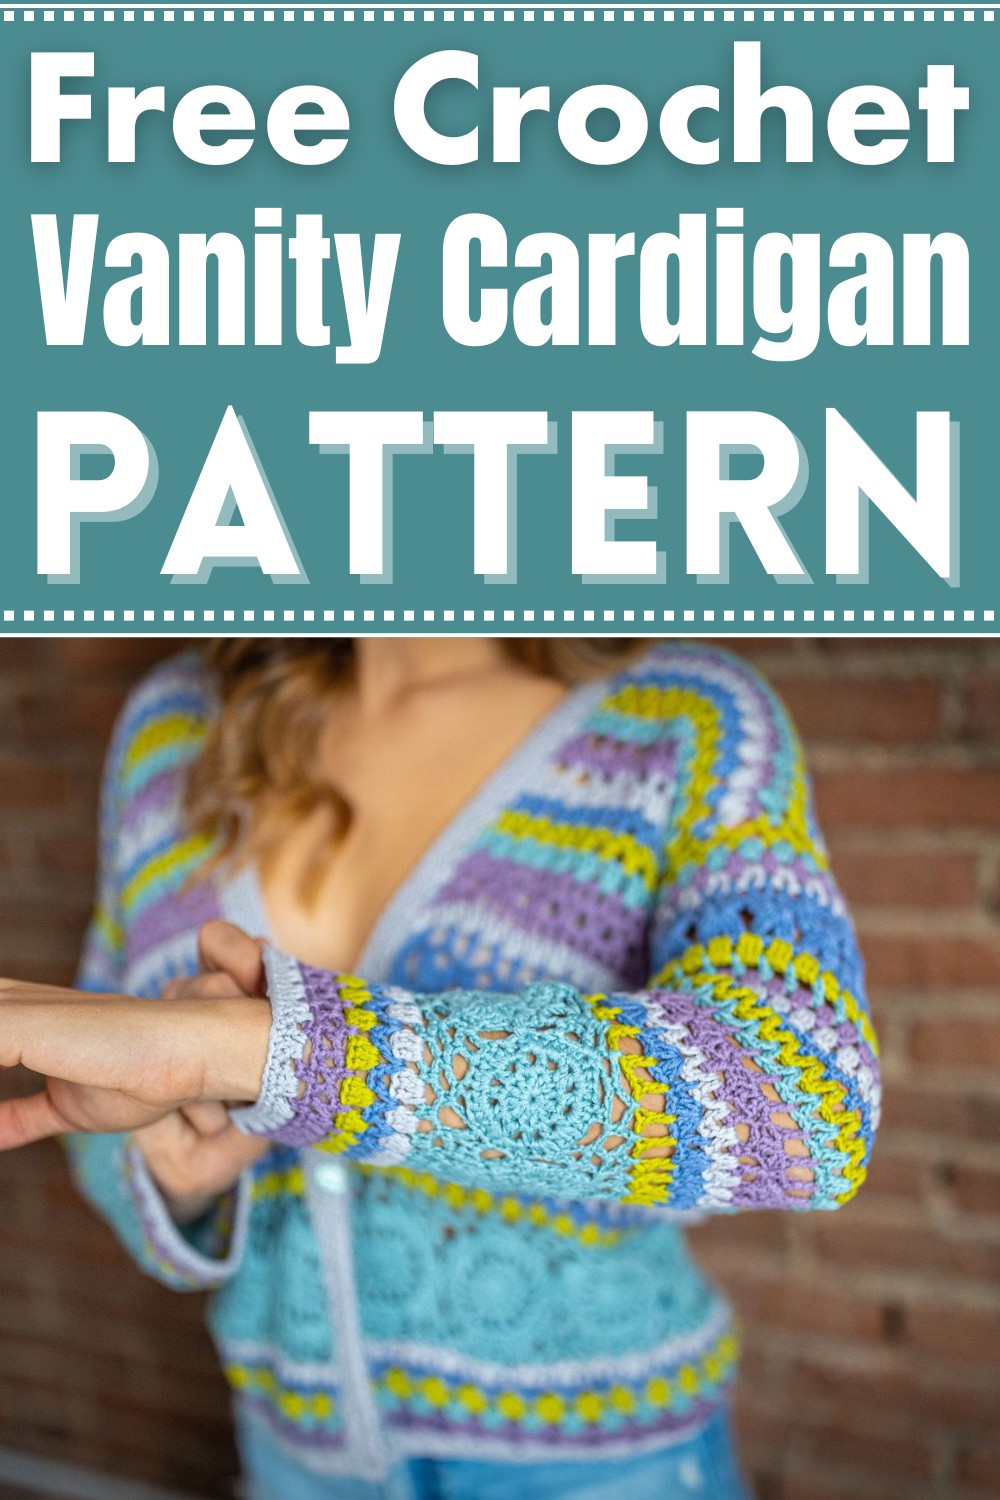 Crochet Vanity Cardigan Pattern